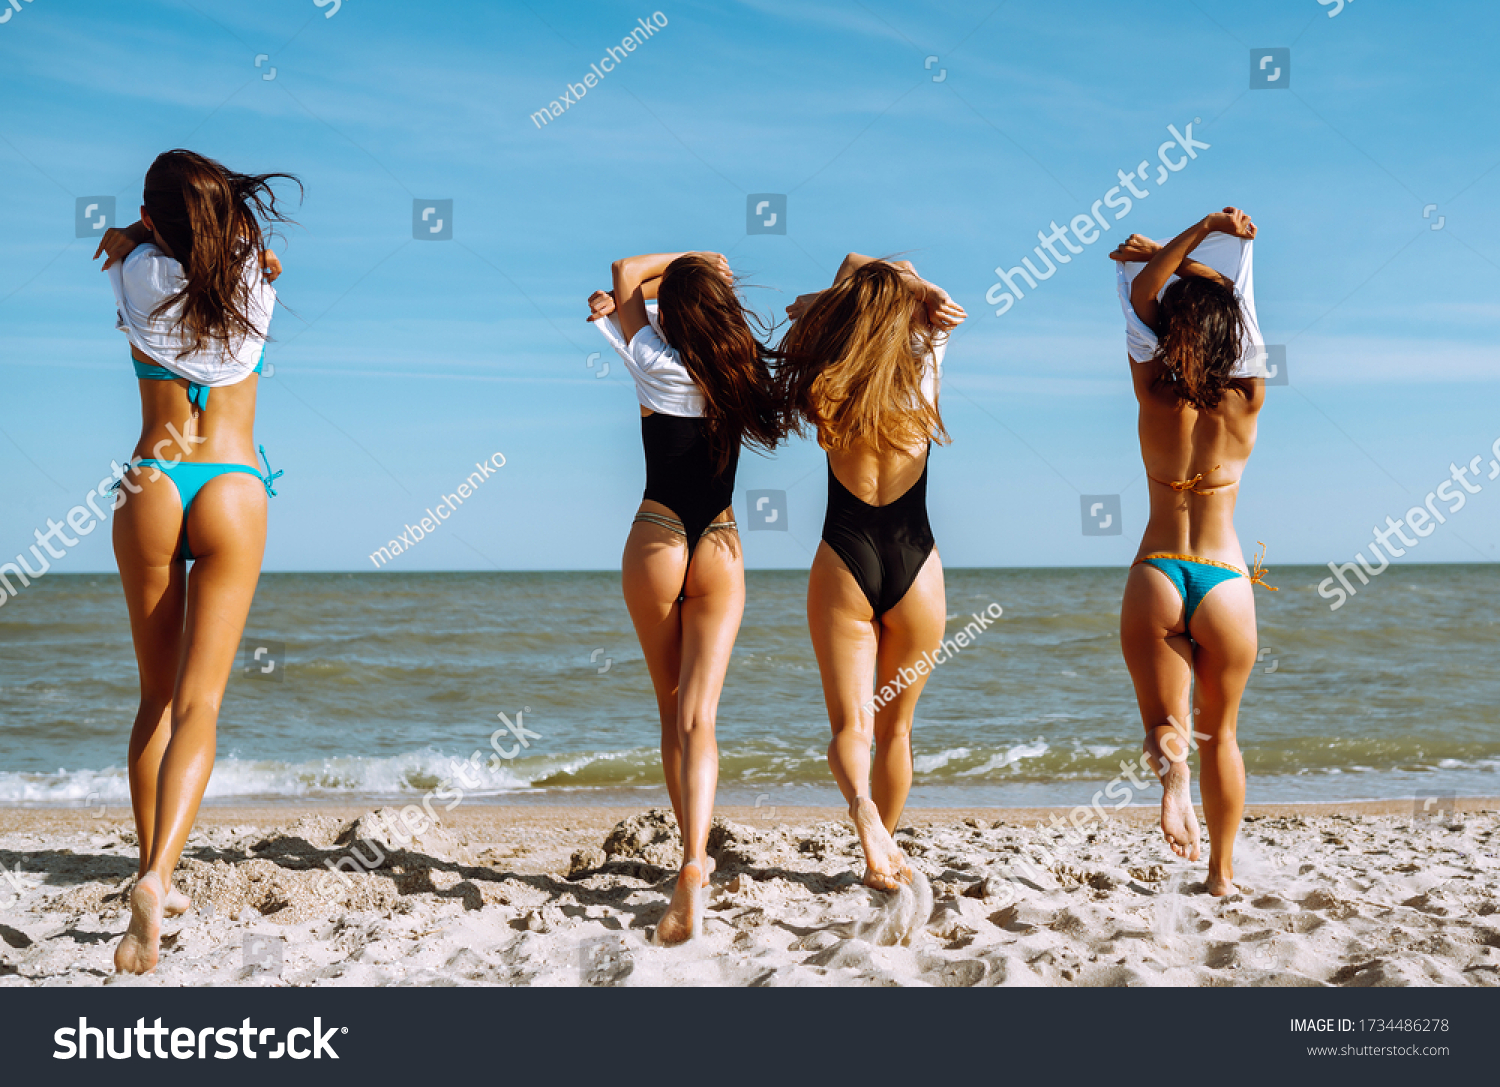 dariel hambrick add photo girls taking off swimsuits